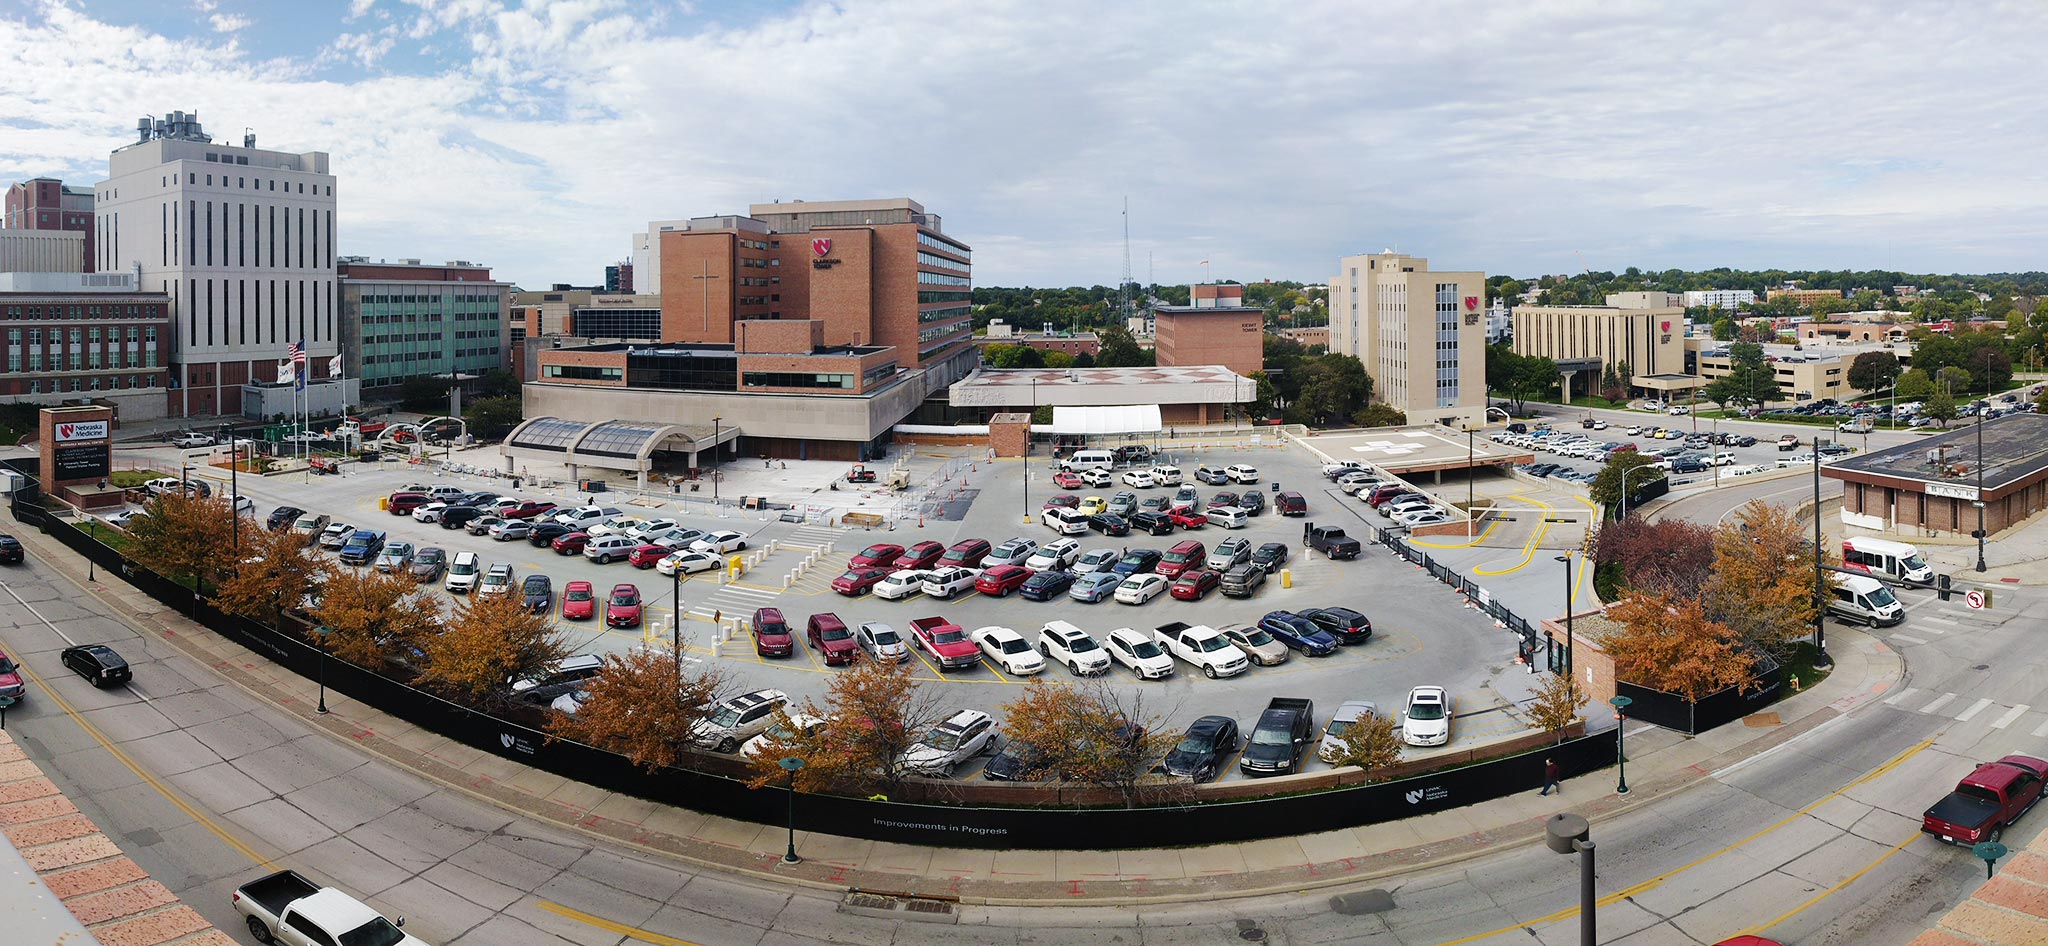 Nebraska Medical Center Project Named “Best Restoration”